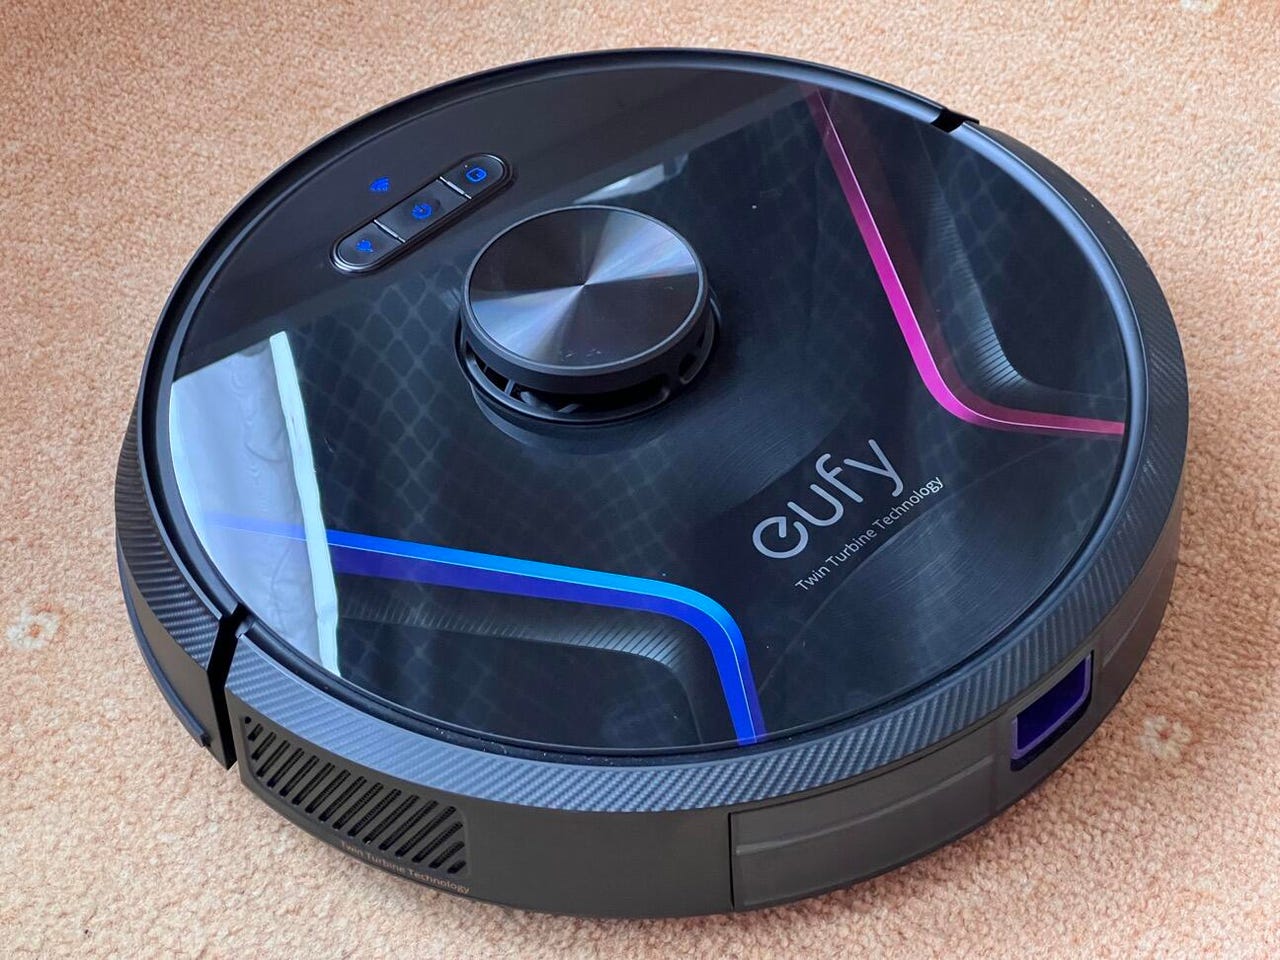 Eufy robot vacuum on carpet